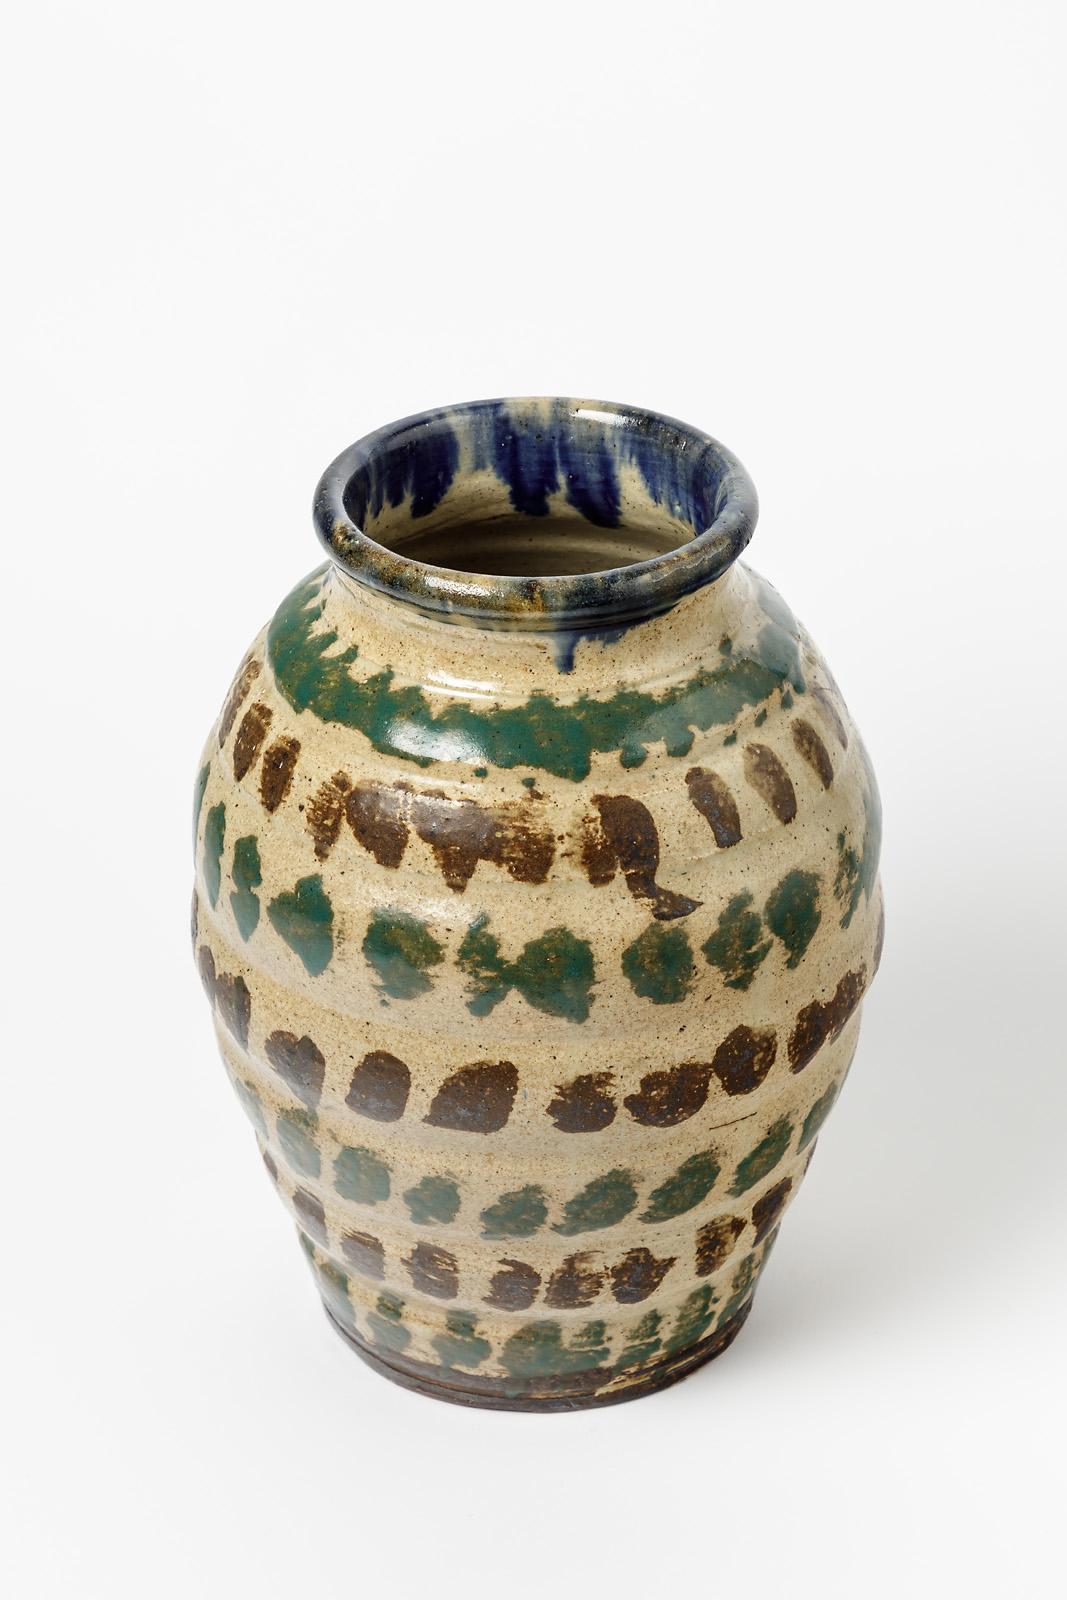 20th Century 20th century art deco stoneware colored ceramic vase by Marius Bernon La Borne